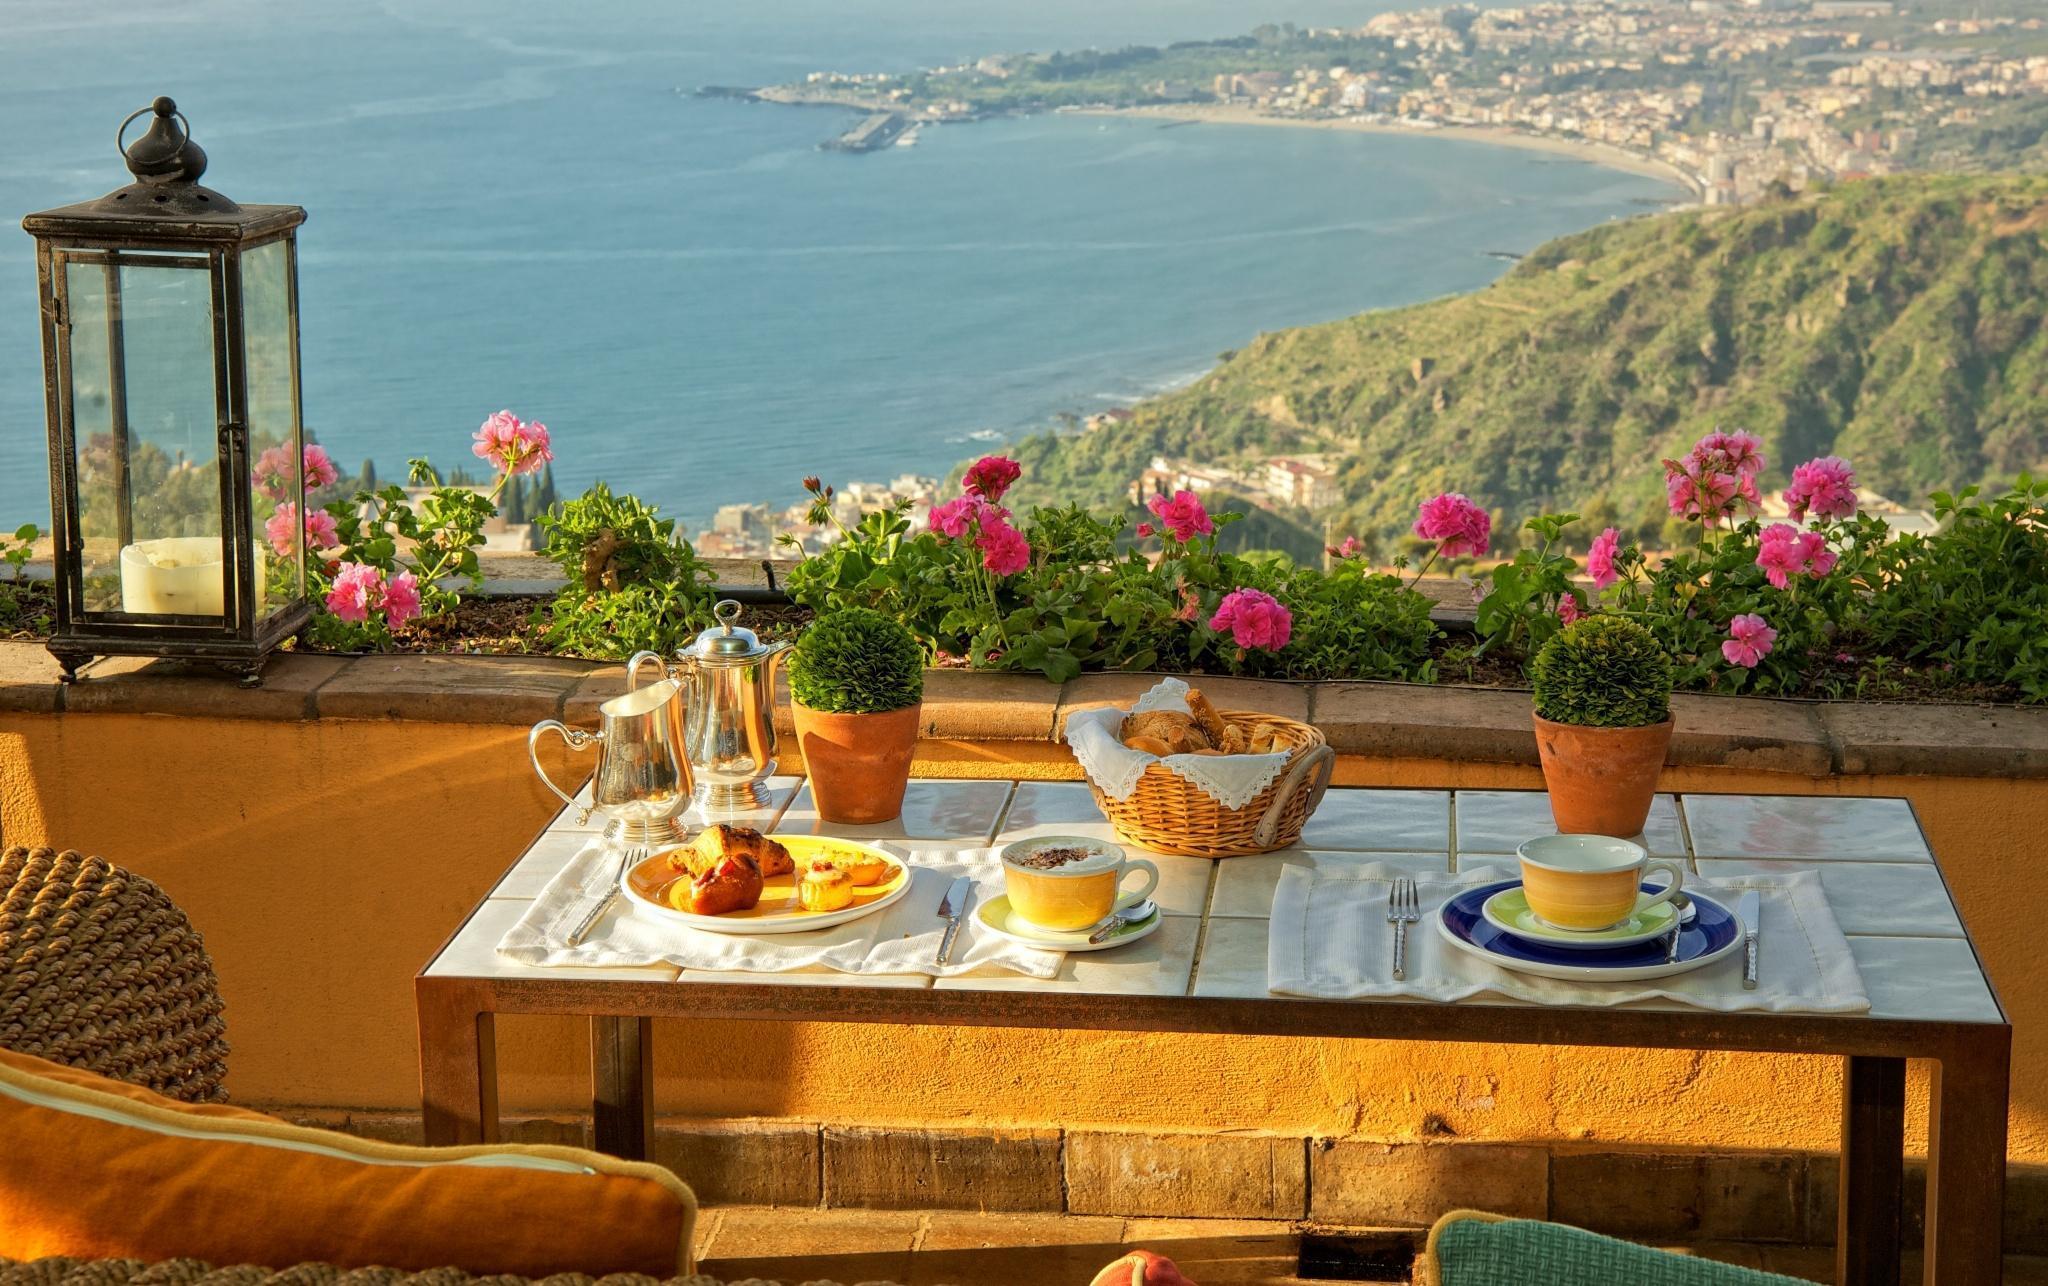 Sicily Landscape Breakfast Italy Food Sea Mediterranean Plants Flowers Table Cushions Bay Lamp Balco 2048x1286